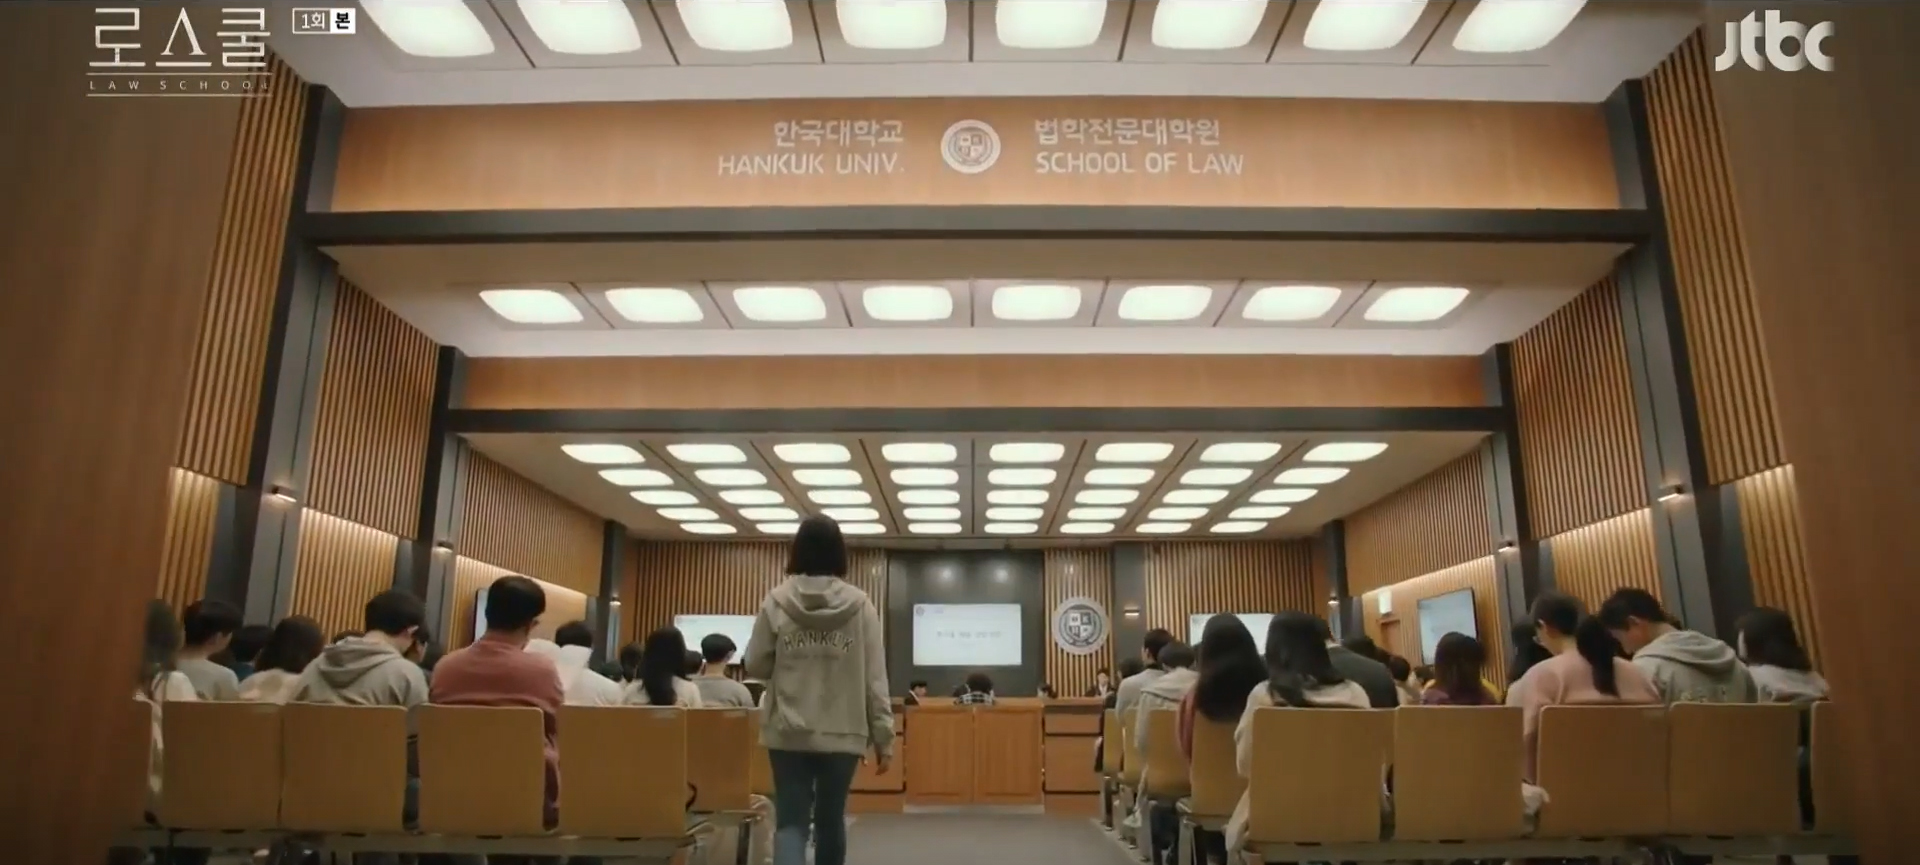 law school korean drama review - law school